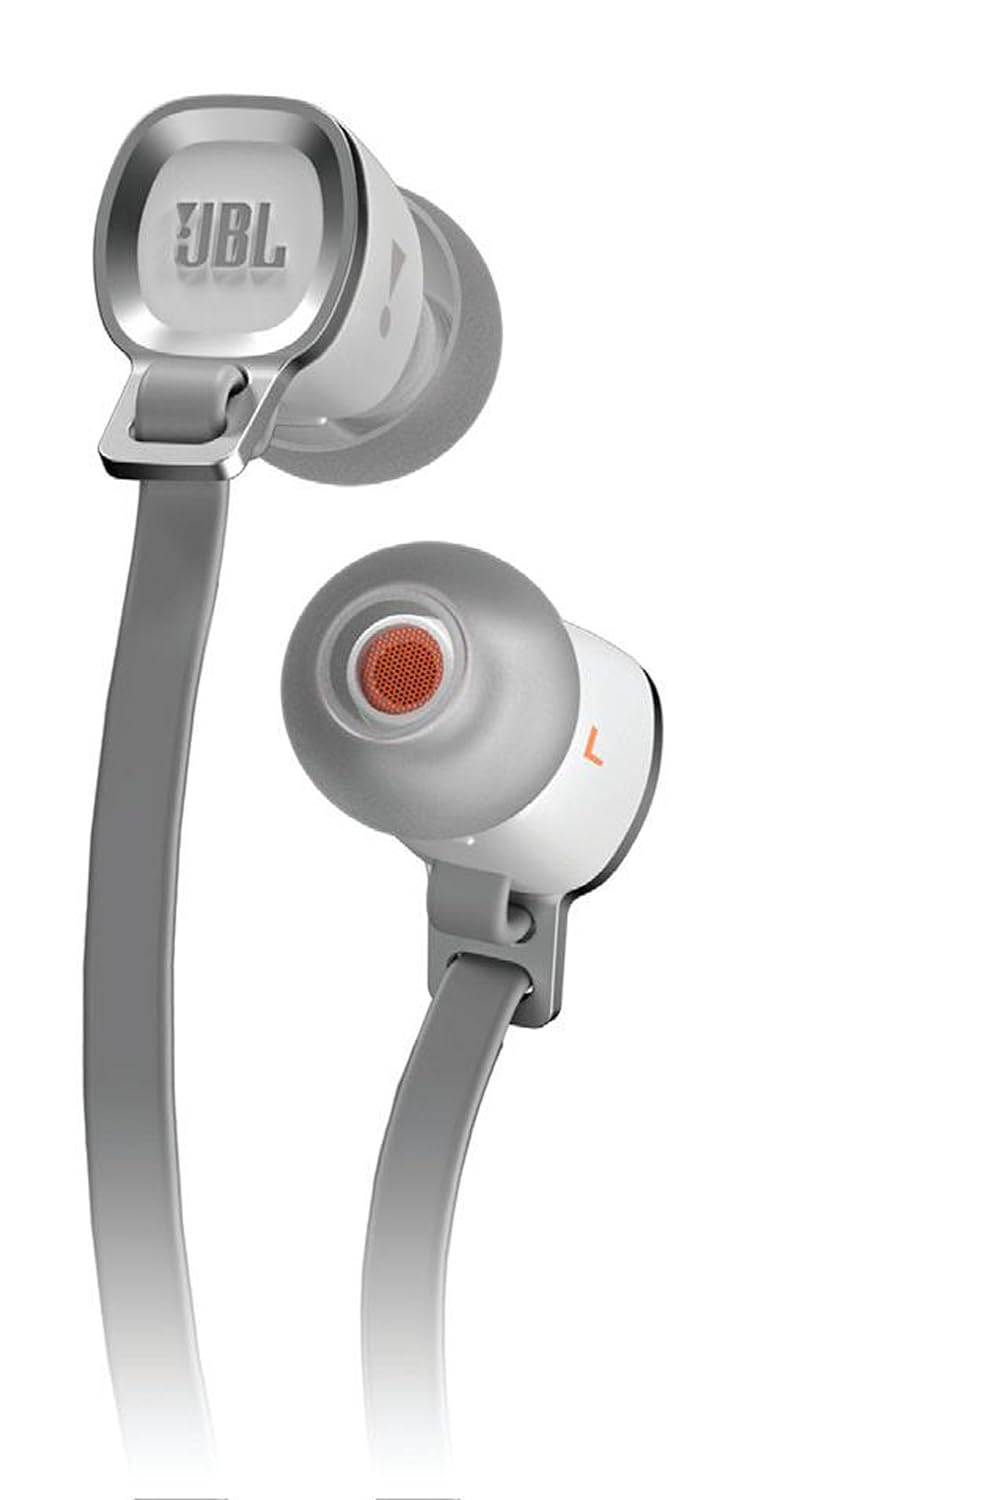 JBL Premium In-Ohr Stereo Kopfhörer mit